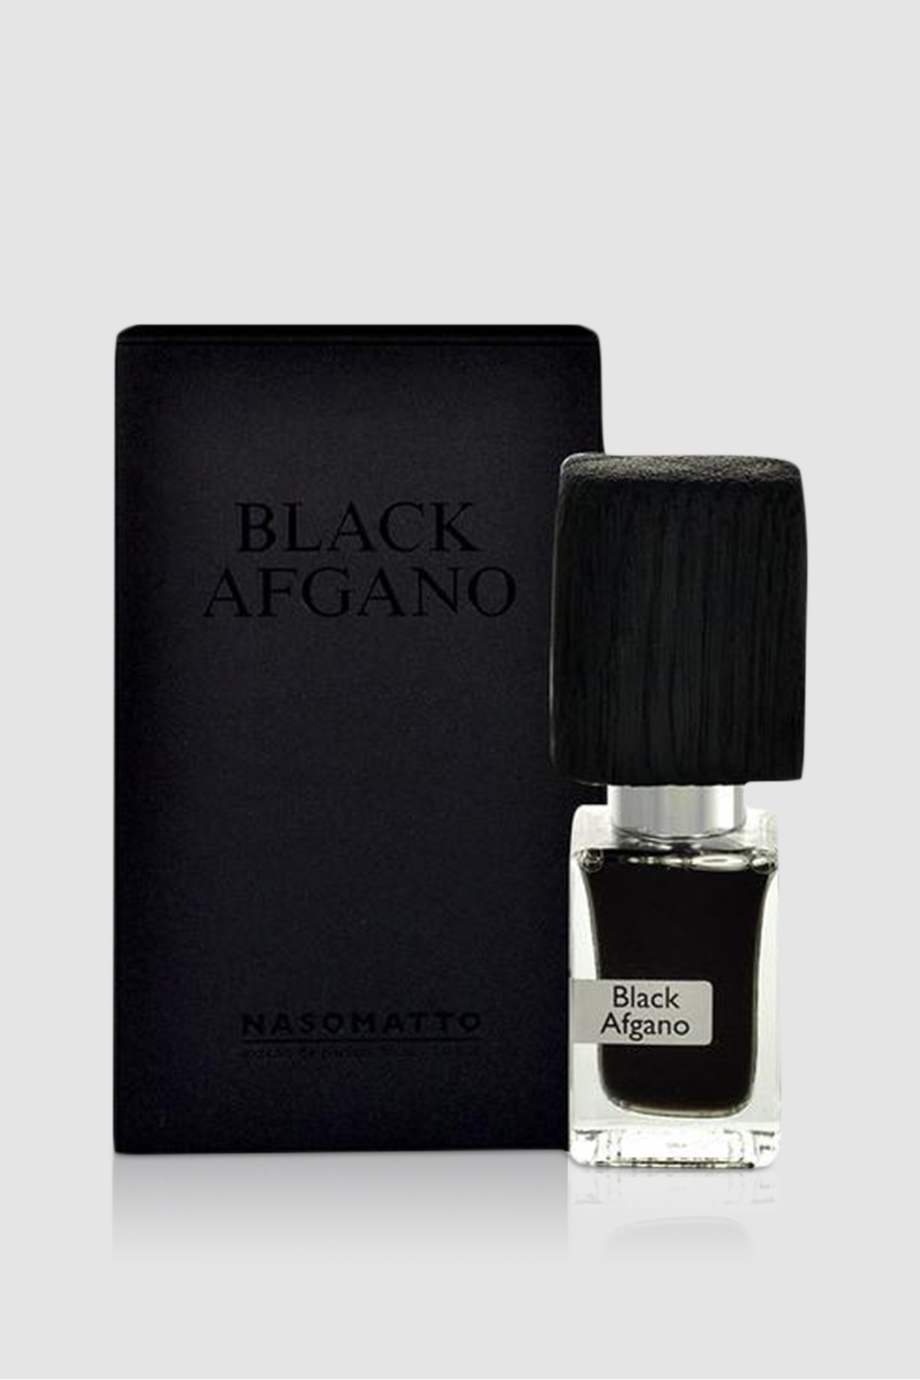 Nasomatto Black Afgano - Jasmine Parfums- [ean]